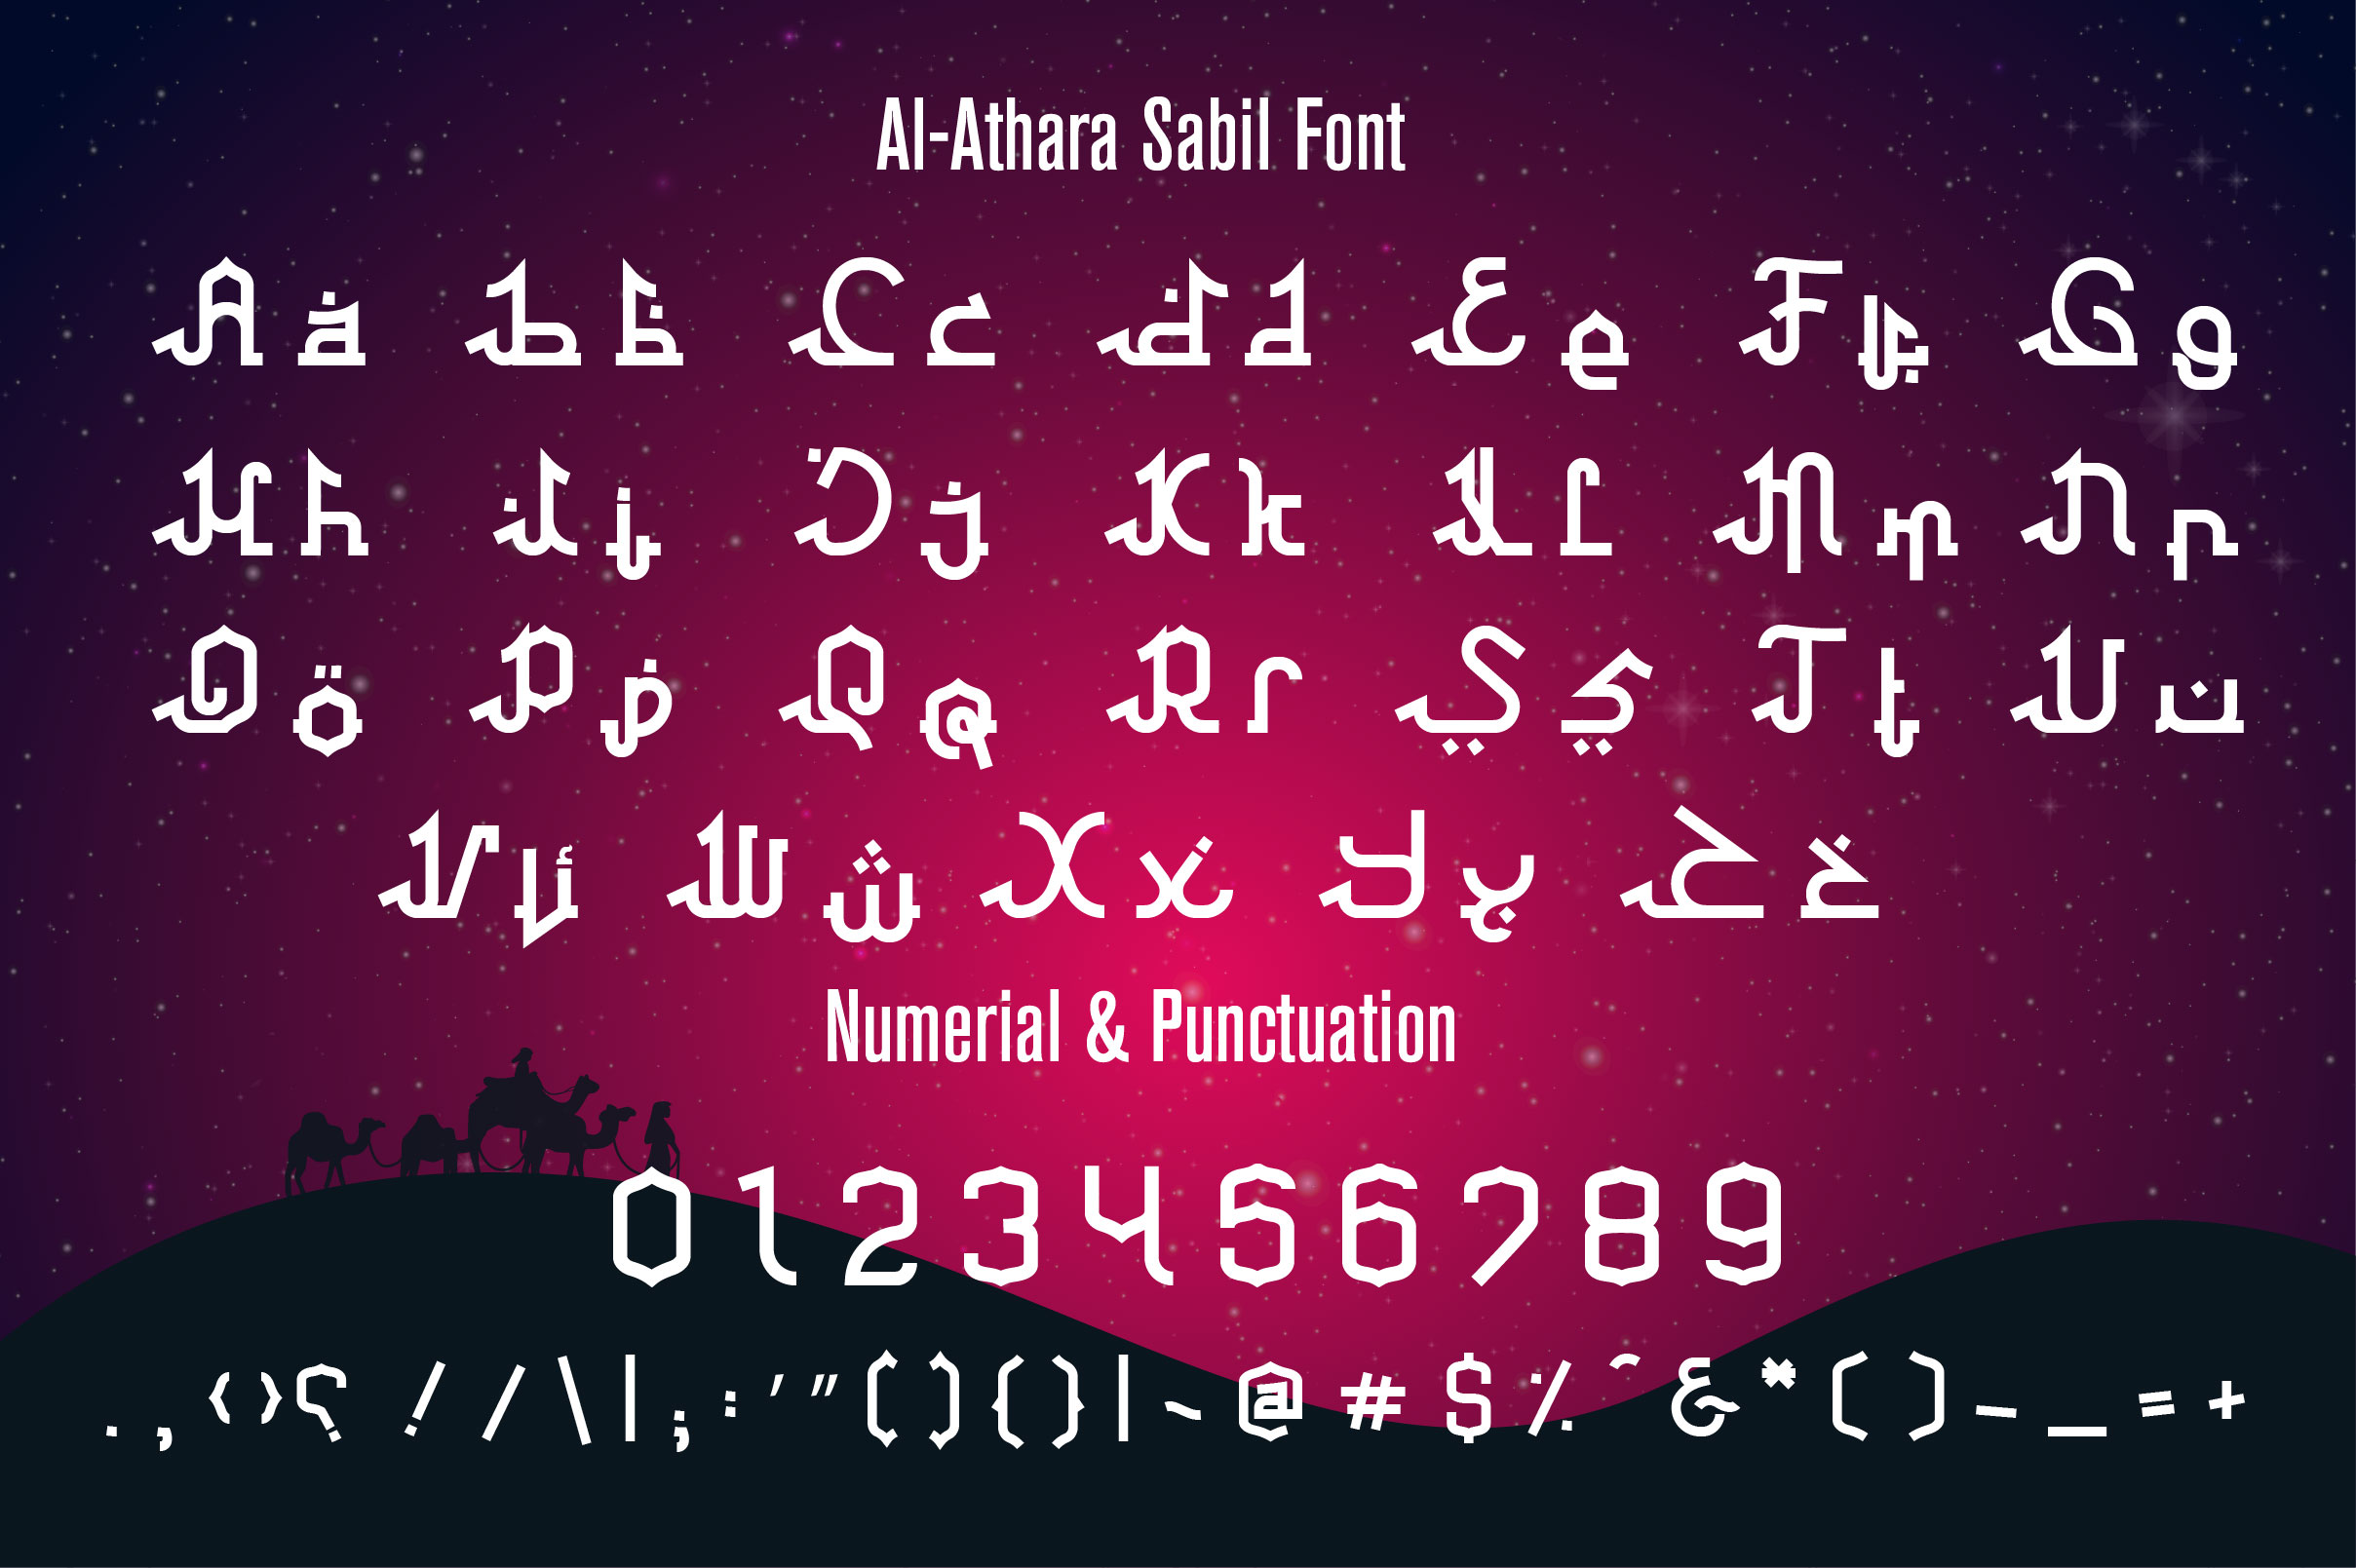 Download Free Al Athara Sabil Font Free Download Similar Fonts Fontget PSD Mockup Template